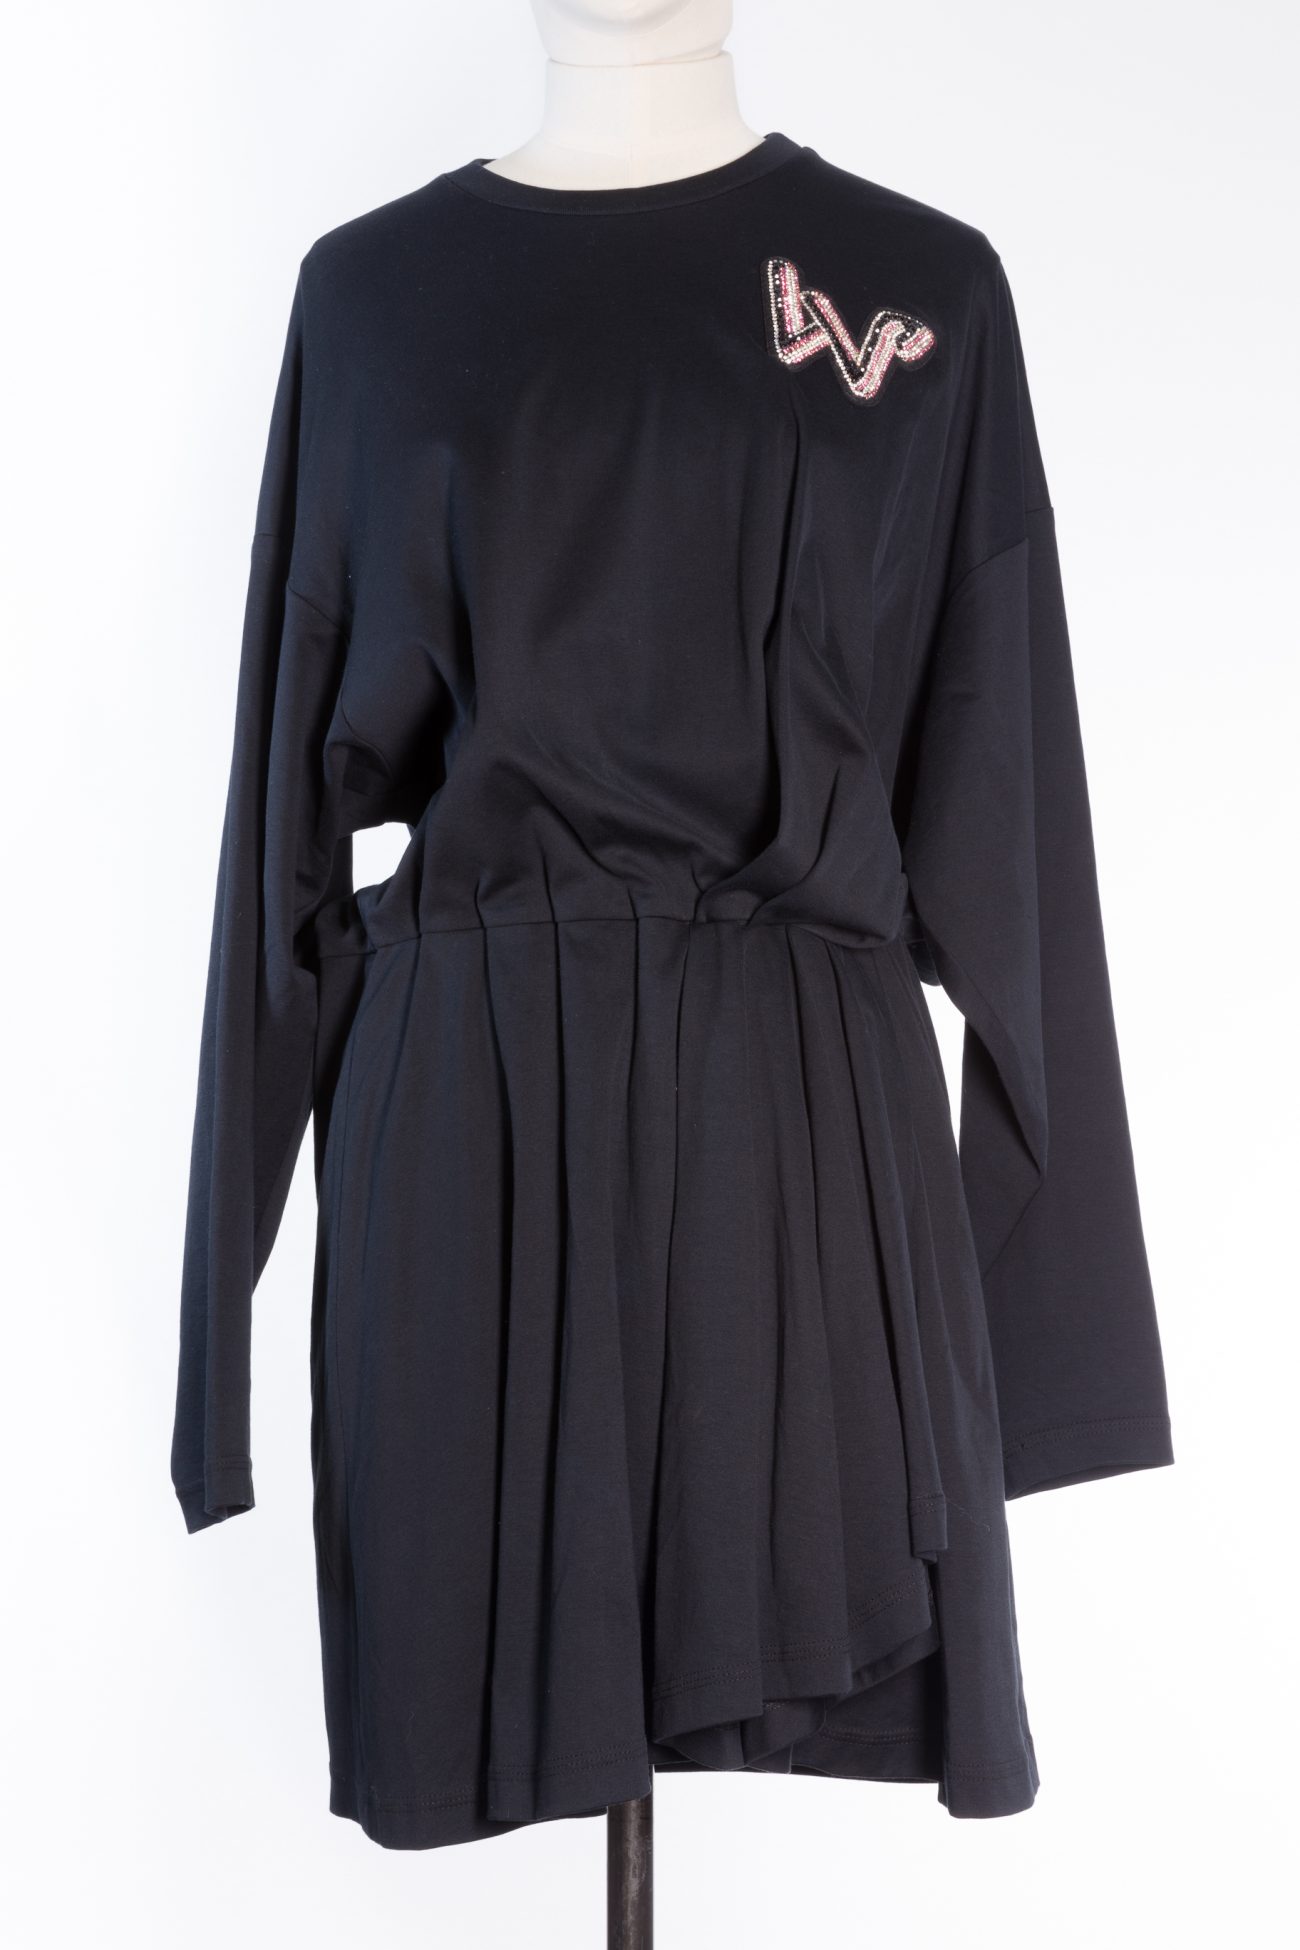 Louis Vuitton Black crystal-embellished cotton pullover T-shirt dress